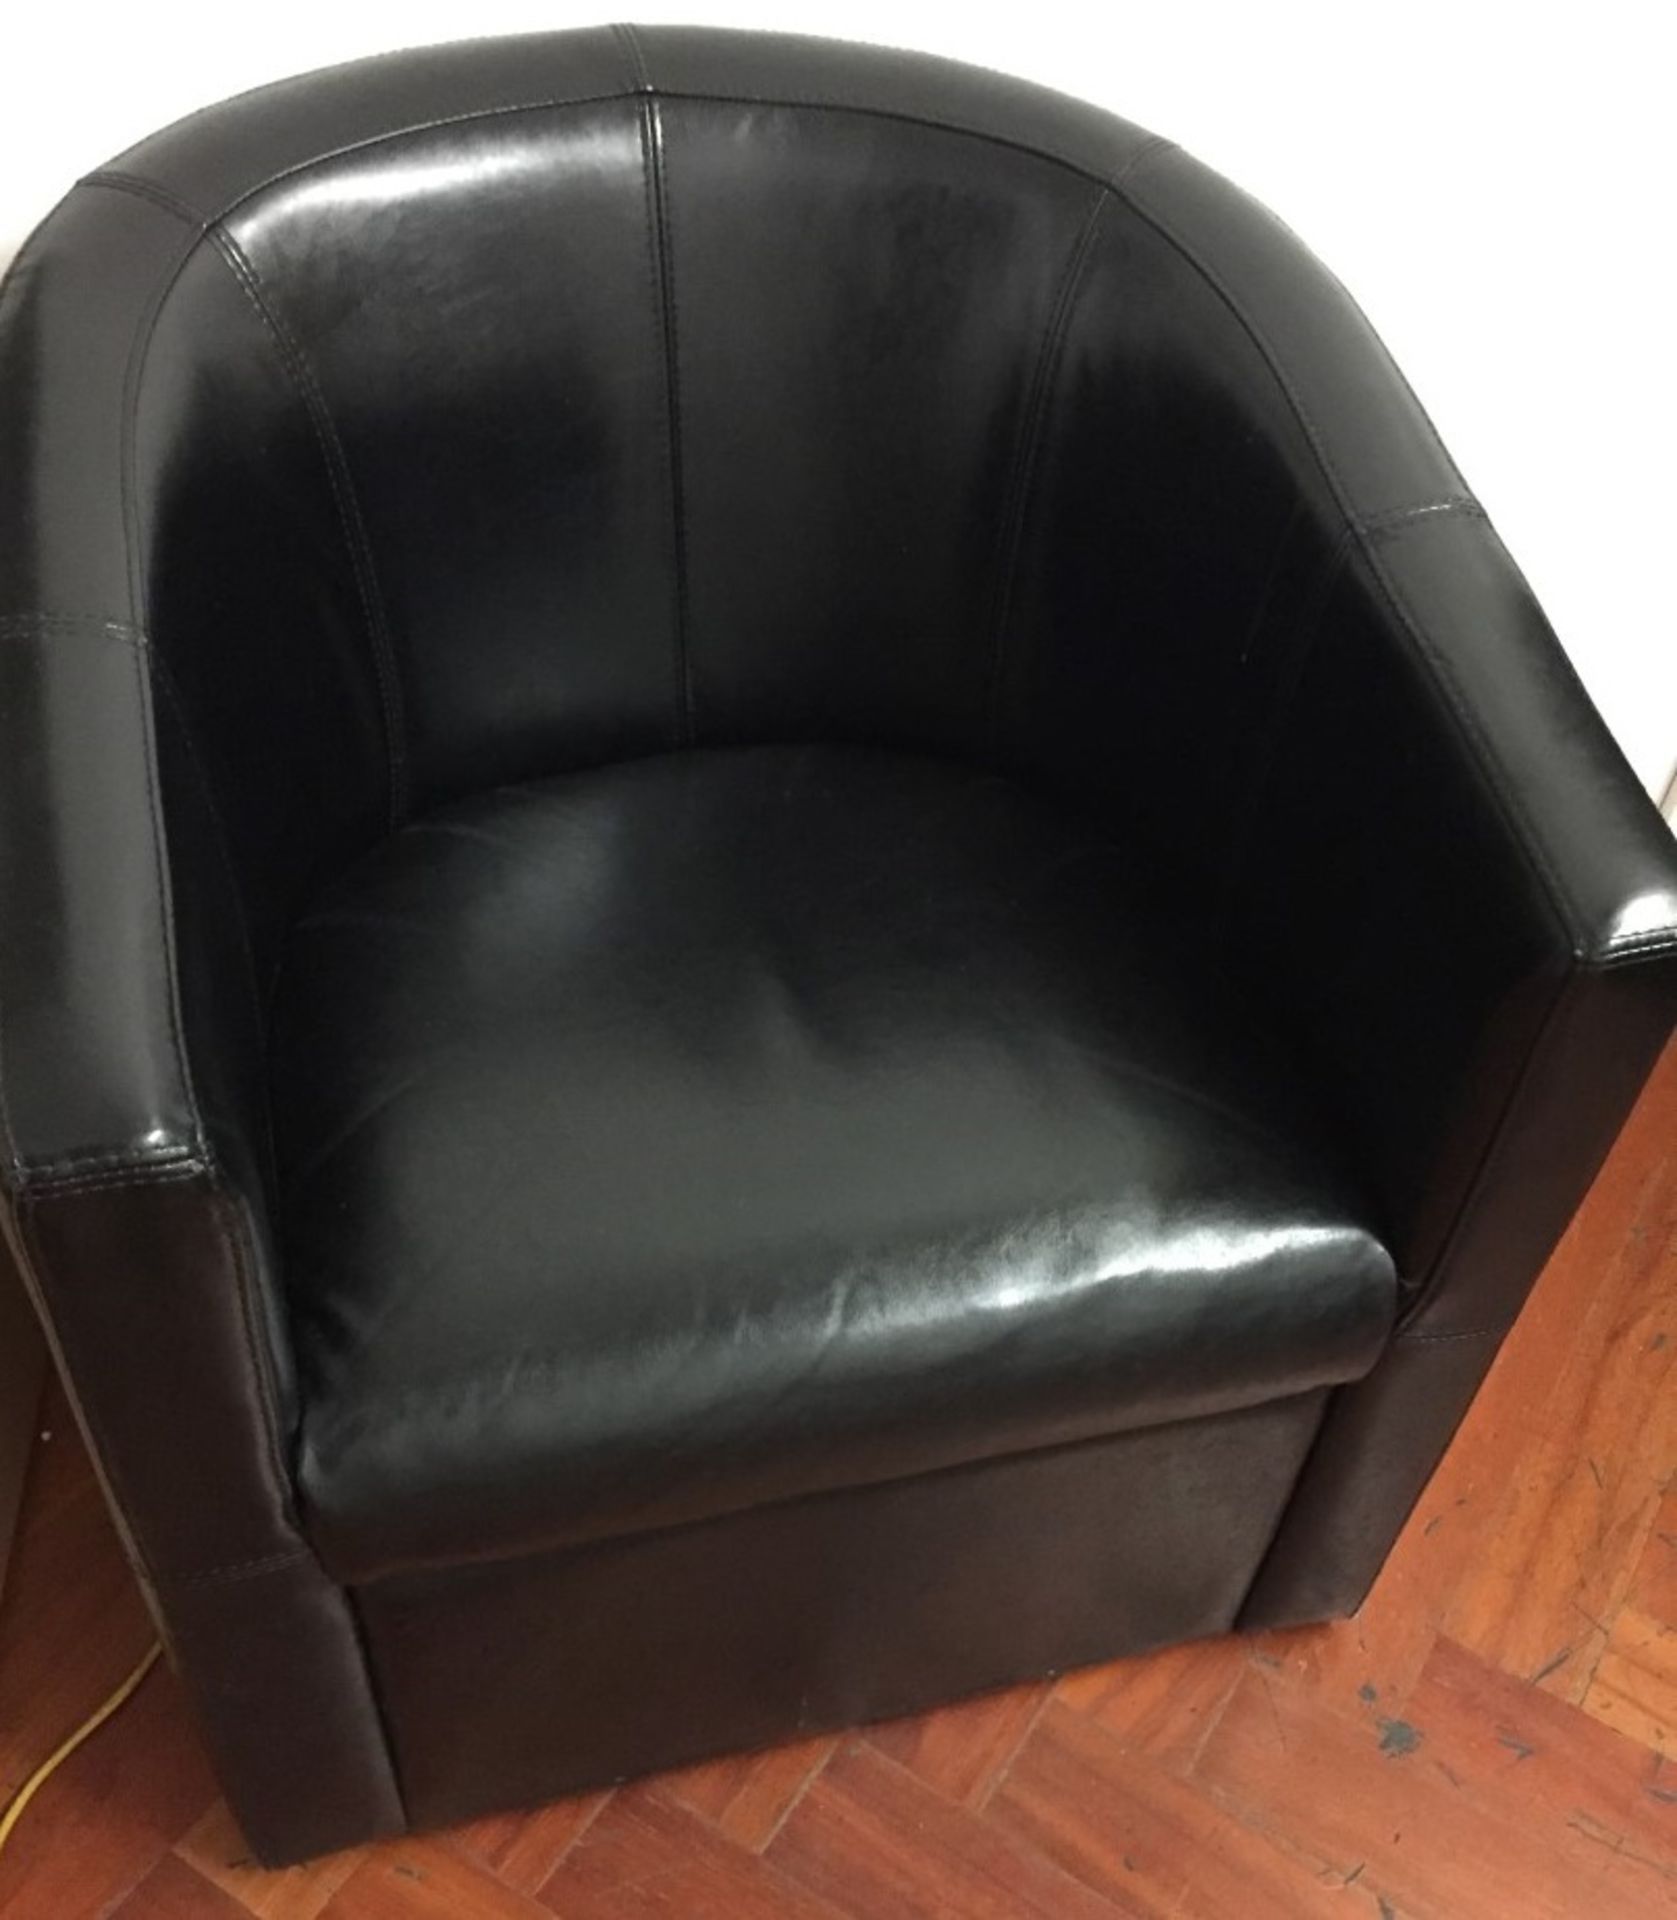 4 x Black Leather Tub Chairs - H70/42 x W70 x D70 cms - CL188 - Ref B35  - Location: London W1J - Image 2 of 6